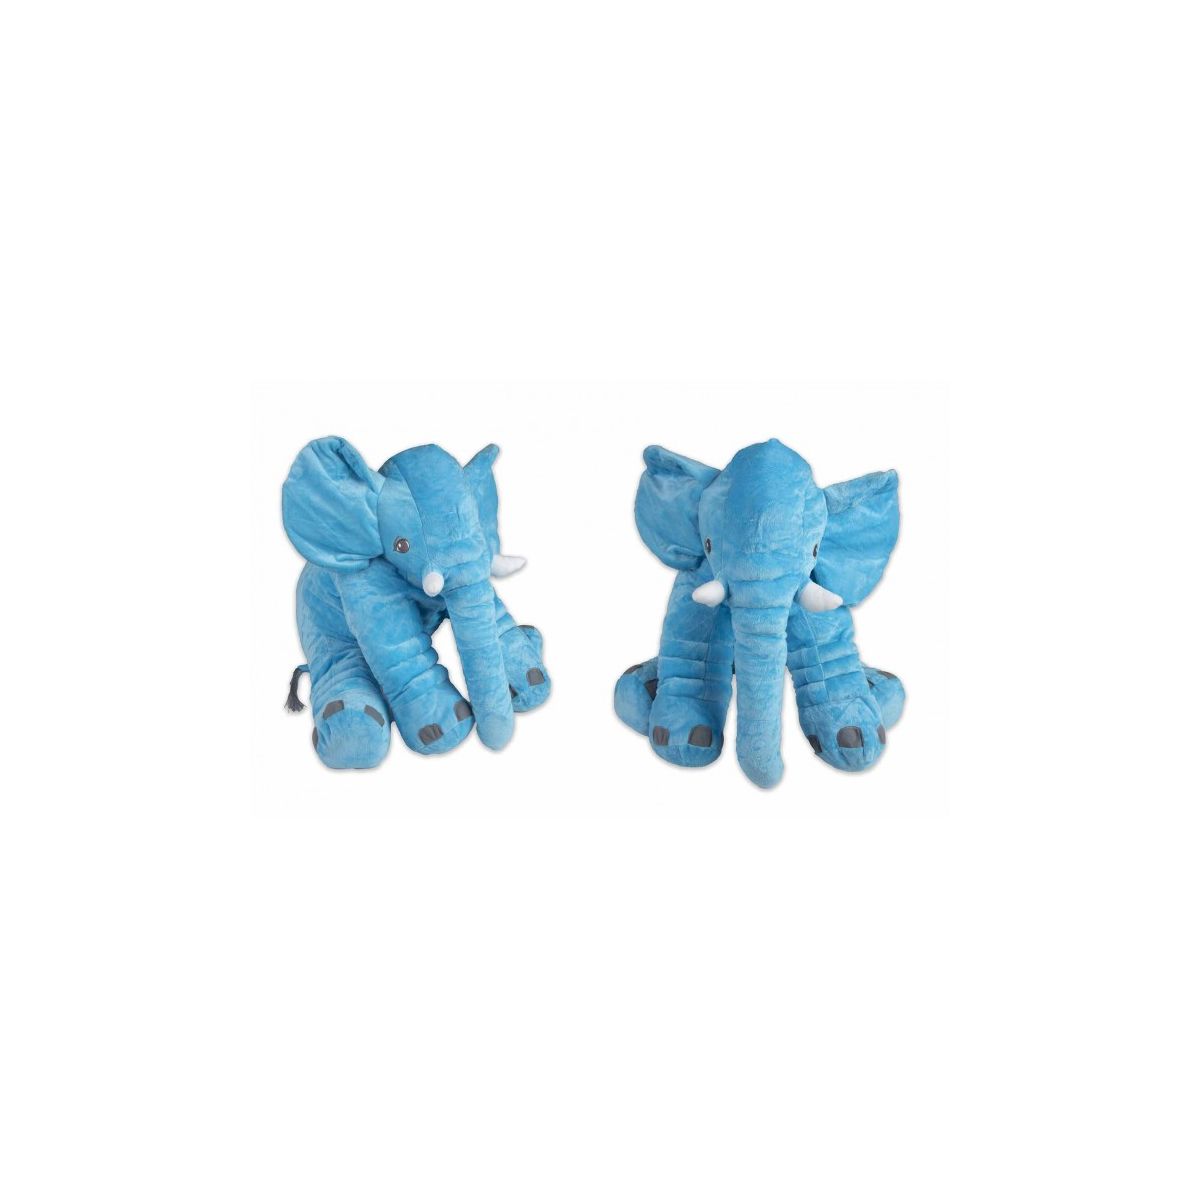 Pluszak słoń niebieski [mm:] 600 Norimpex (NO-1007868)